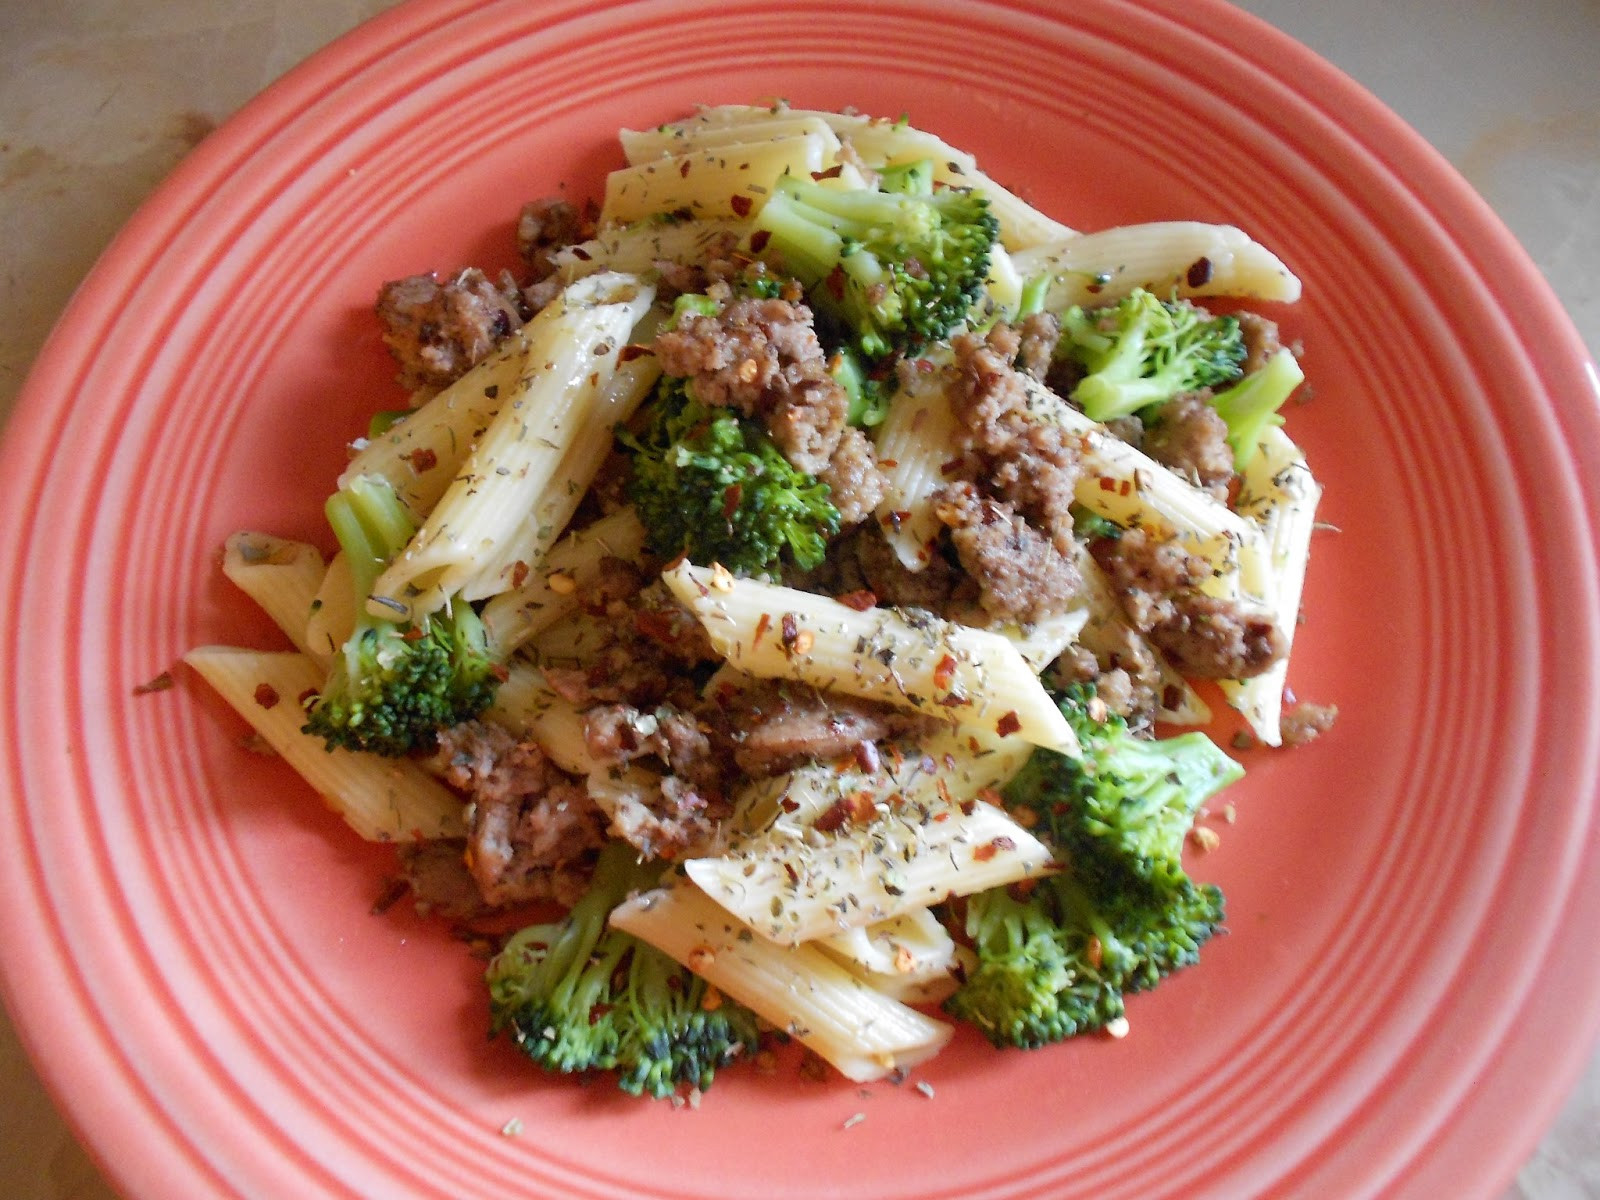 Ground Turkey And Broccoli Recipes
 A Healthy Dinner Pasta With Ground Turkey and Broccoli